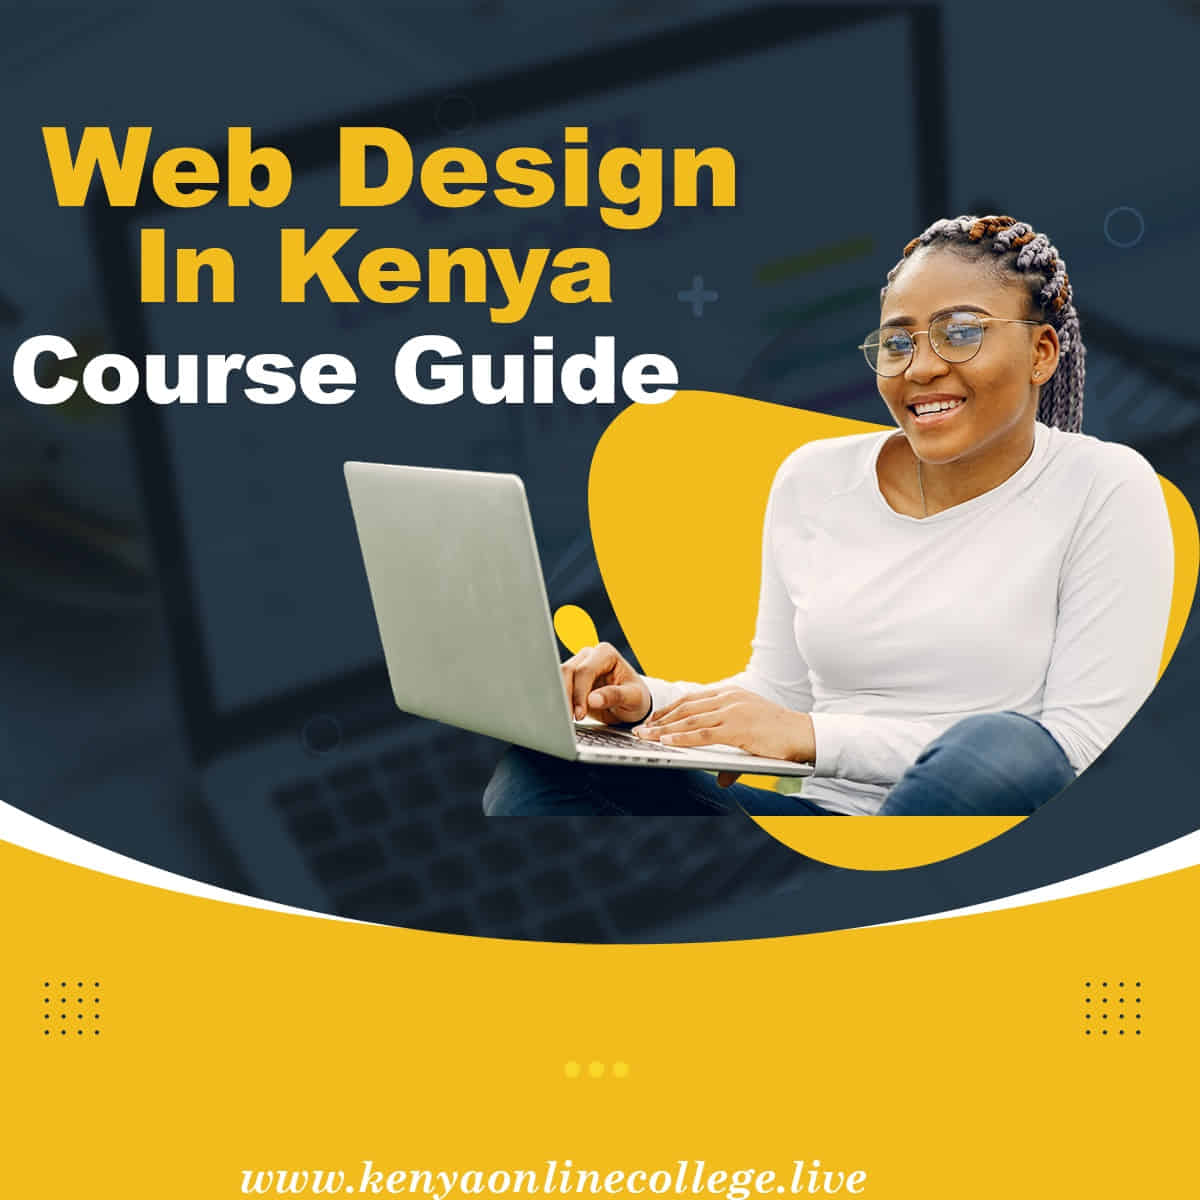 Web design course in Kenya